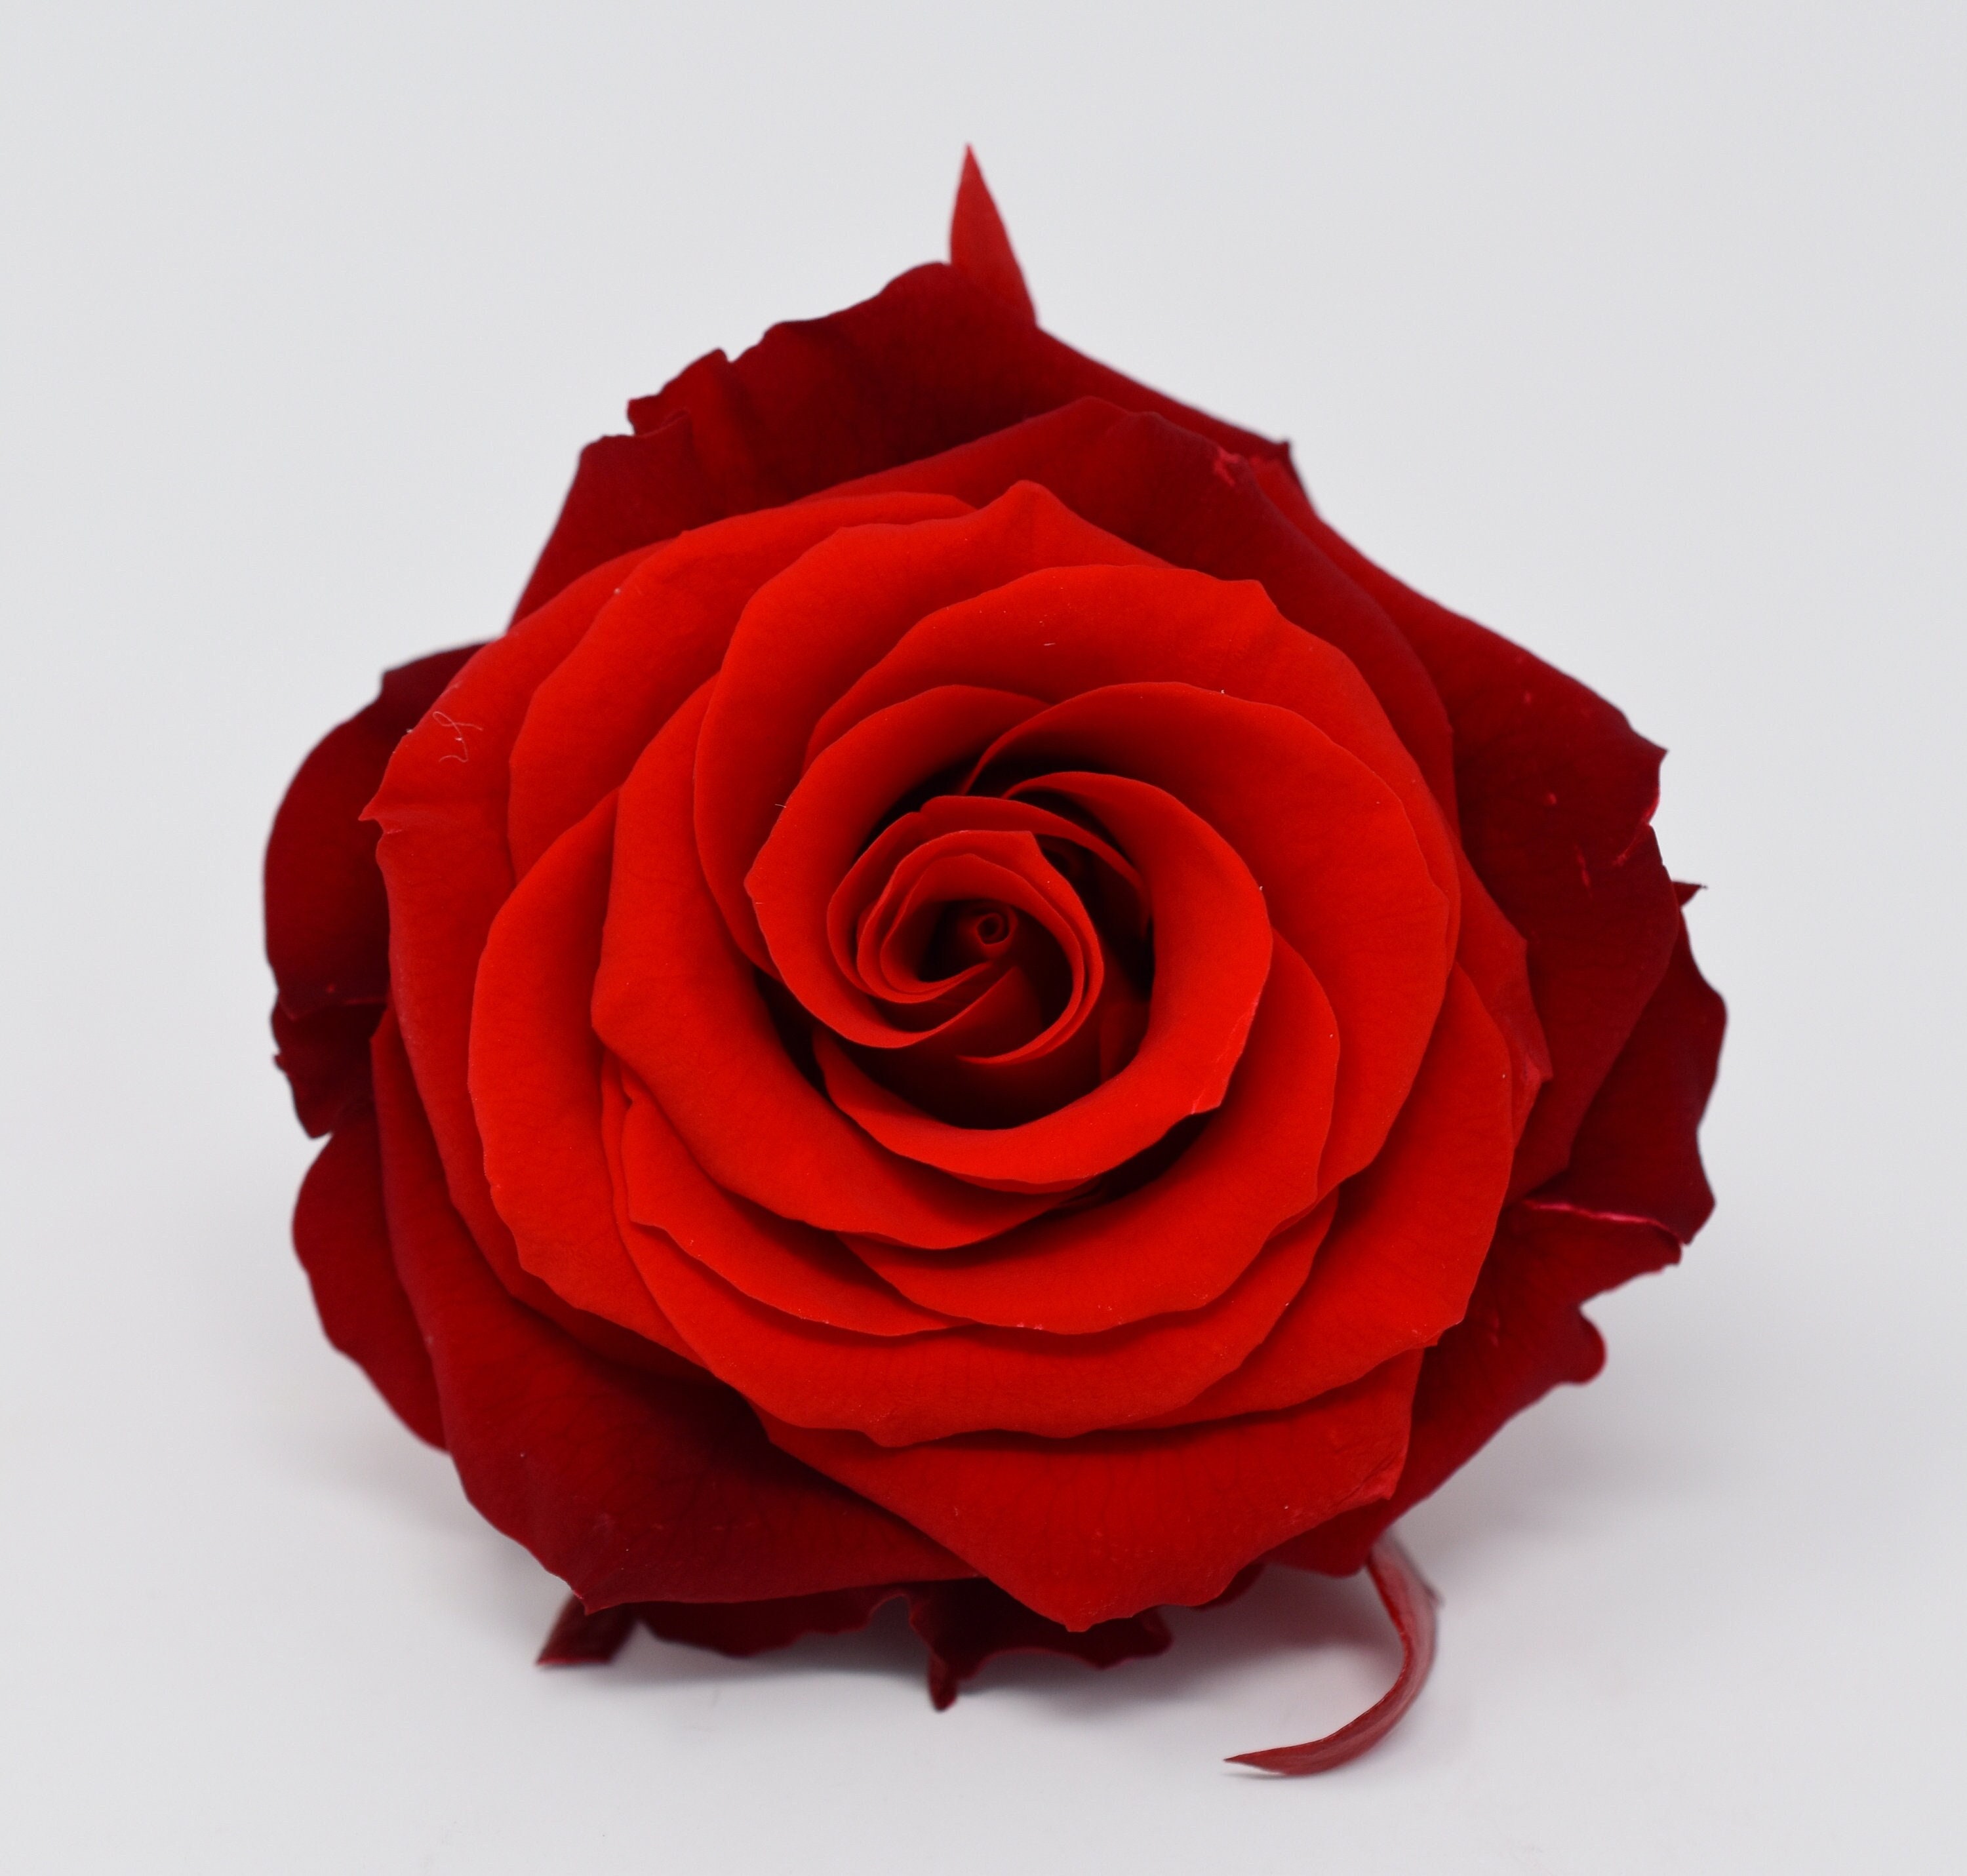 Price Reduced / Susie Rose Buds Preserved Rose in Bridal Pink Color, Floral  Arrangements, Wedding Roses, Rose Gift, Home Decor 